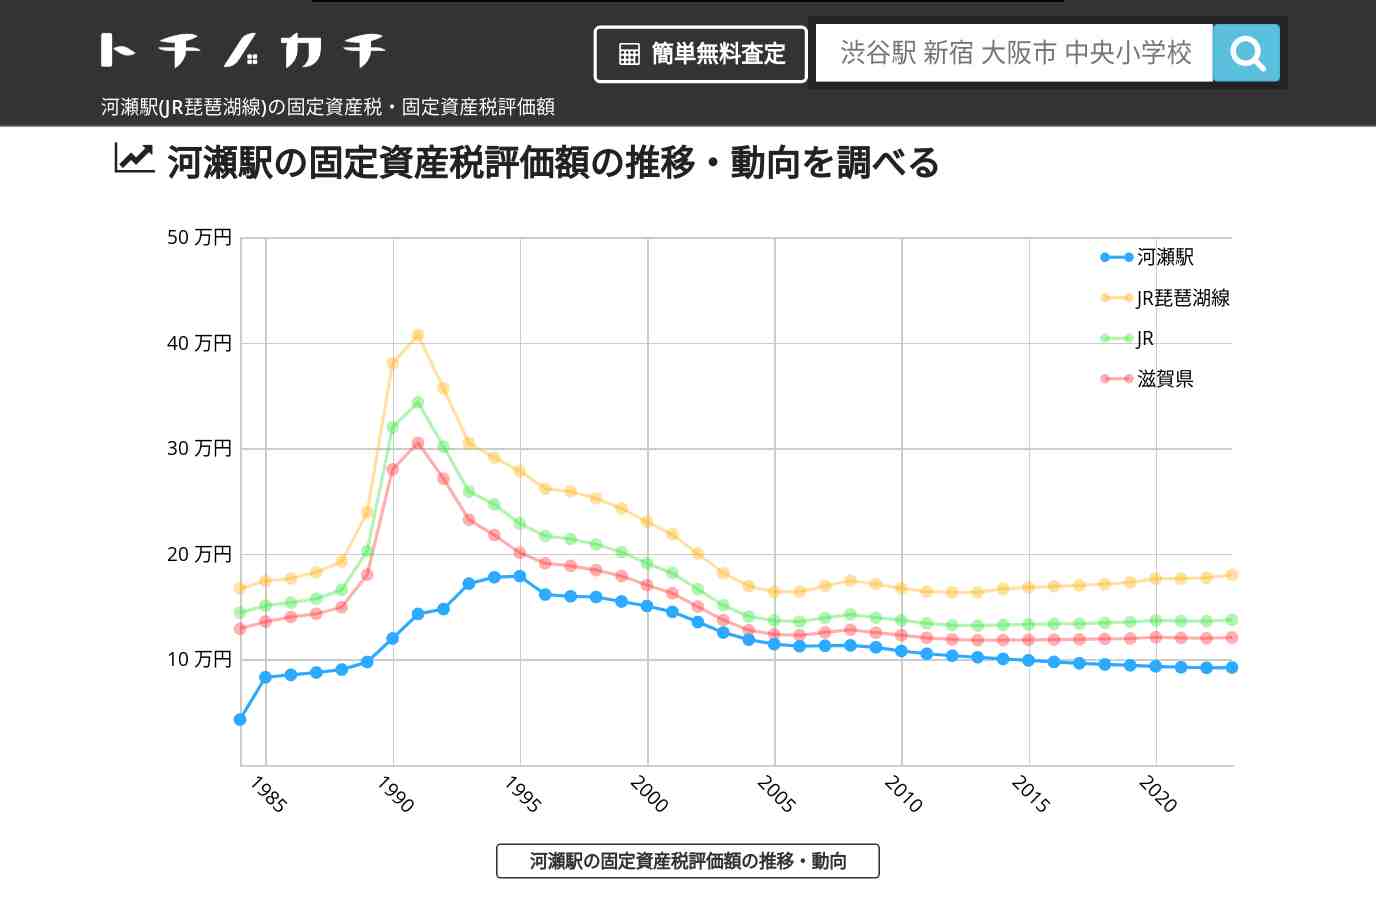 河瀬駅(JR琵琶湖線)の固定資産税・固定資産税評価額 | トチノカチ